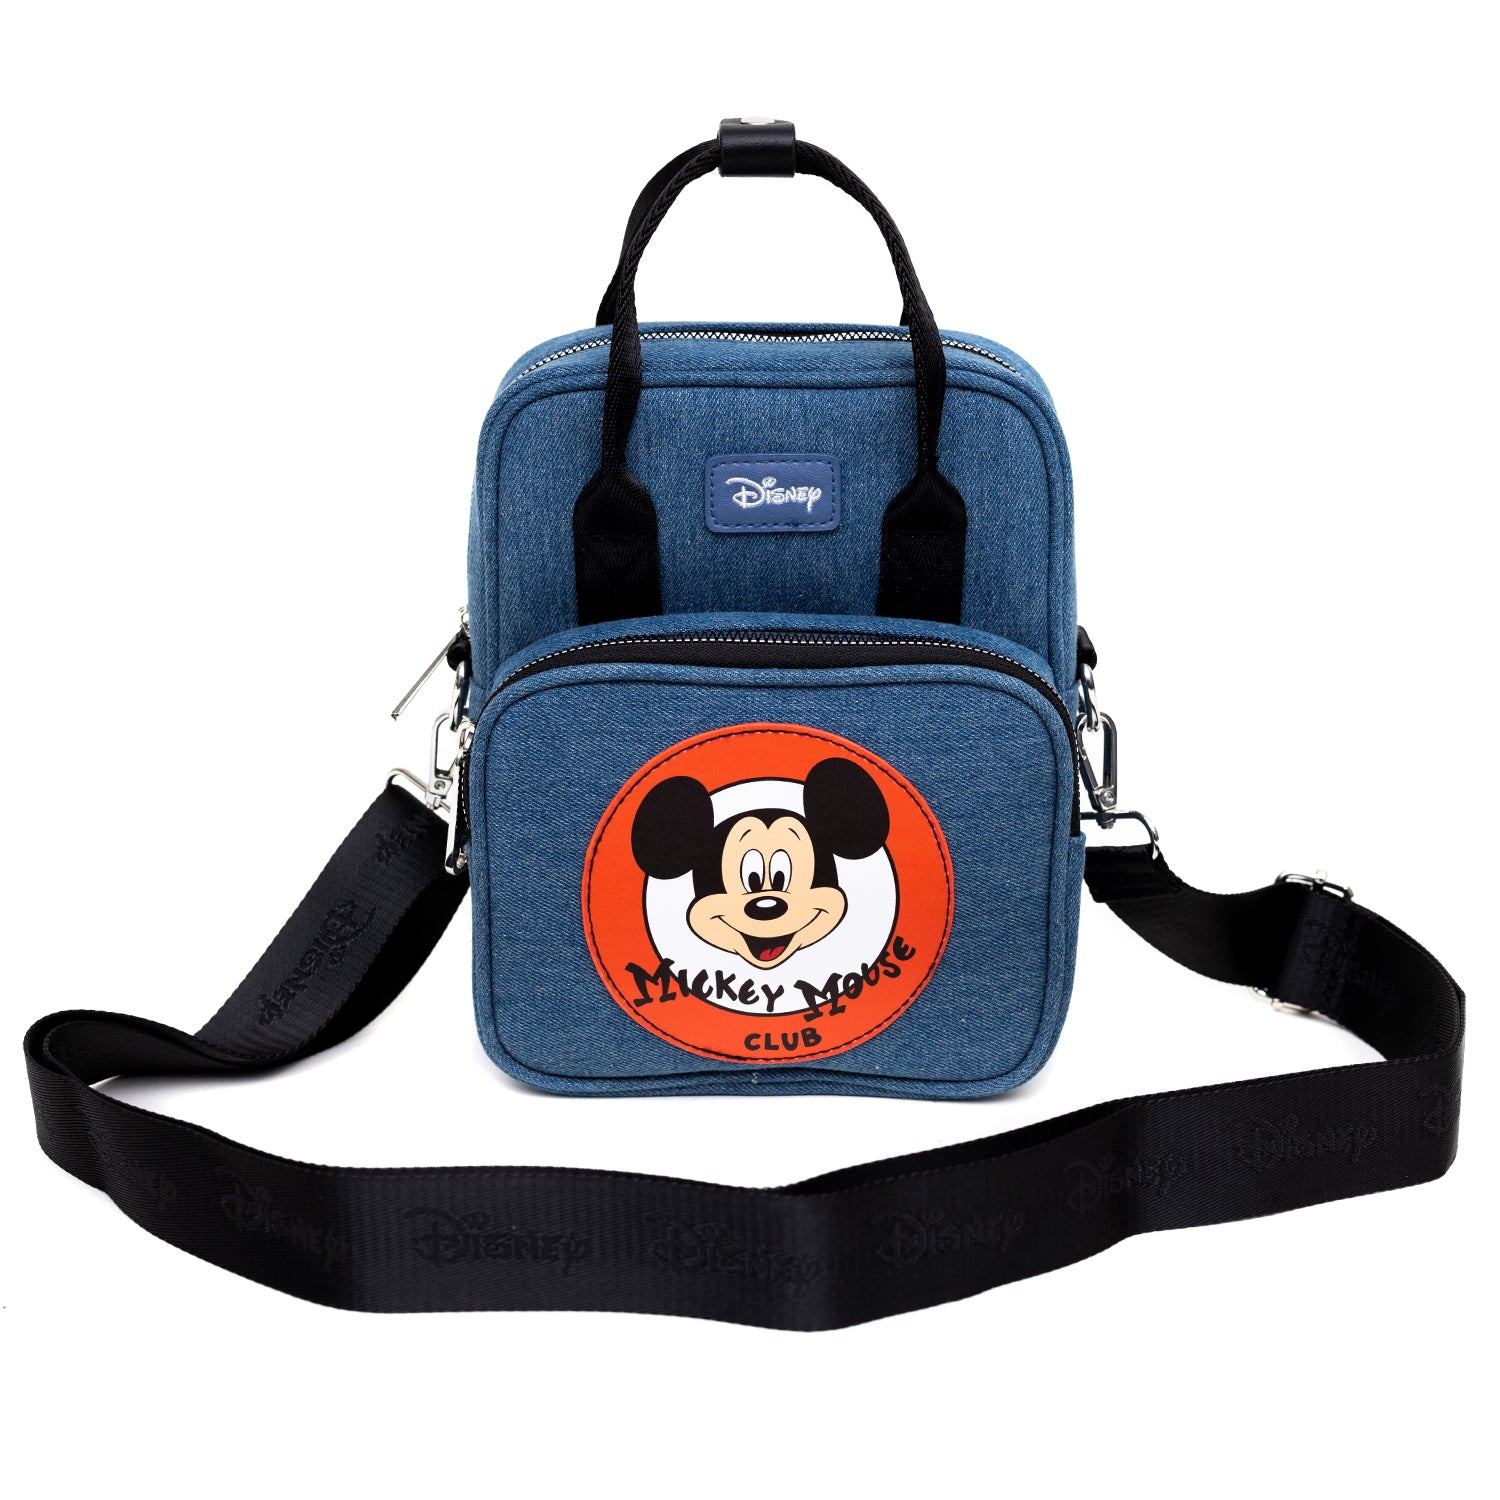 Disney's MICKEY MOUSE CLUB CROSSBODY BAG —Cakeworthy